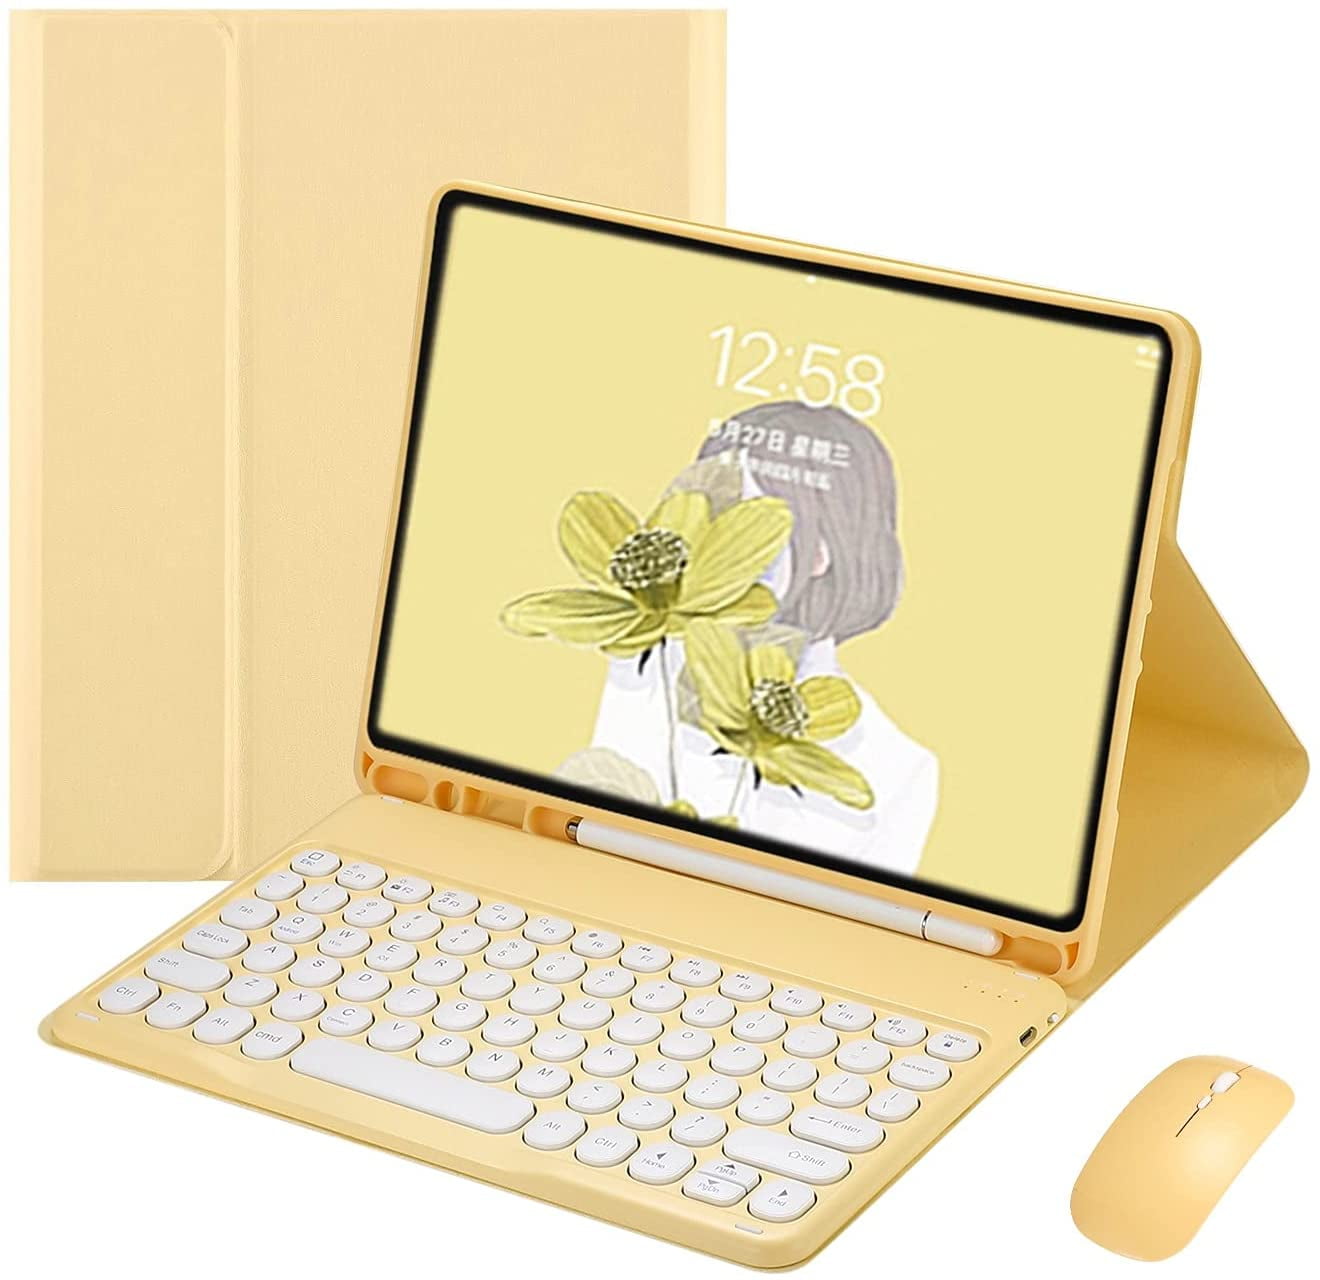 Dingrich Keyboard Case for 9.7 iPad 2018 iPad Air,Smart Protection iPad 9.7 Keyboard Case with 7 Color Backlit Rose Gold iPad Air 2 iPad 2017,iPad Pro 9.7 